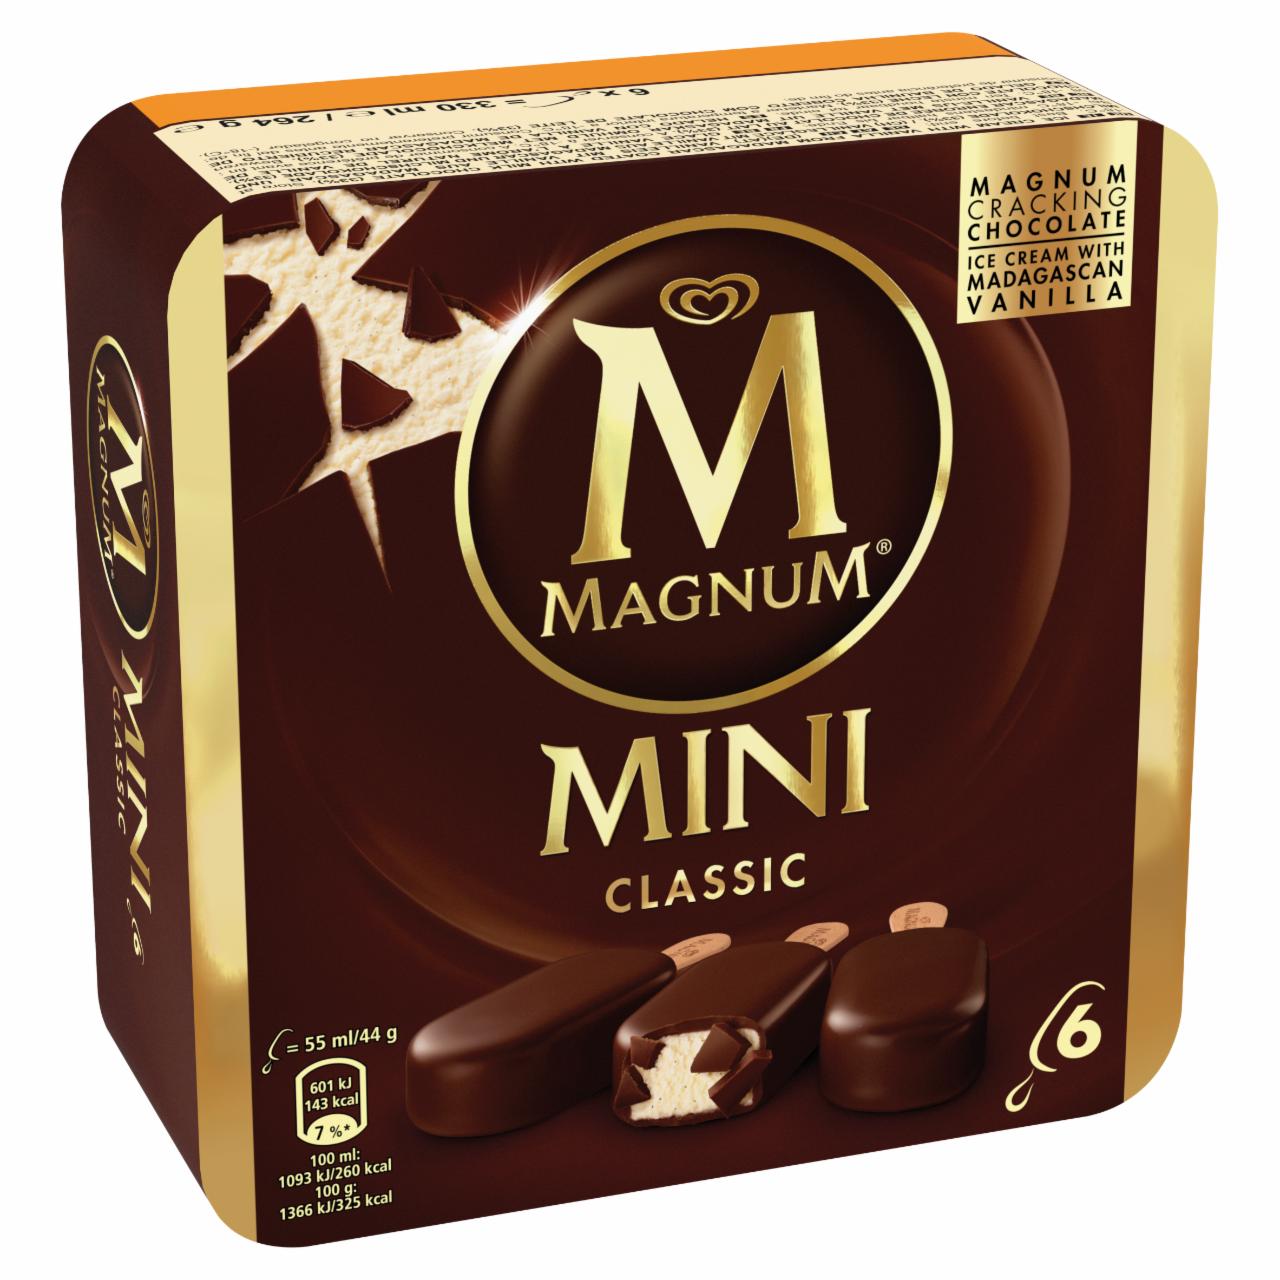 Képek - Magnum Mini Multipack Classic jégkrém 6 x 55 ml